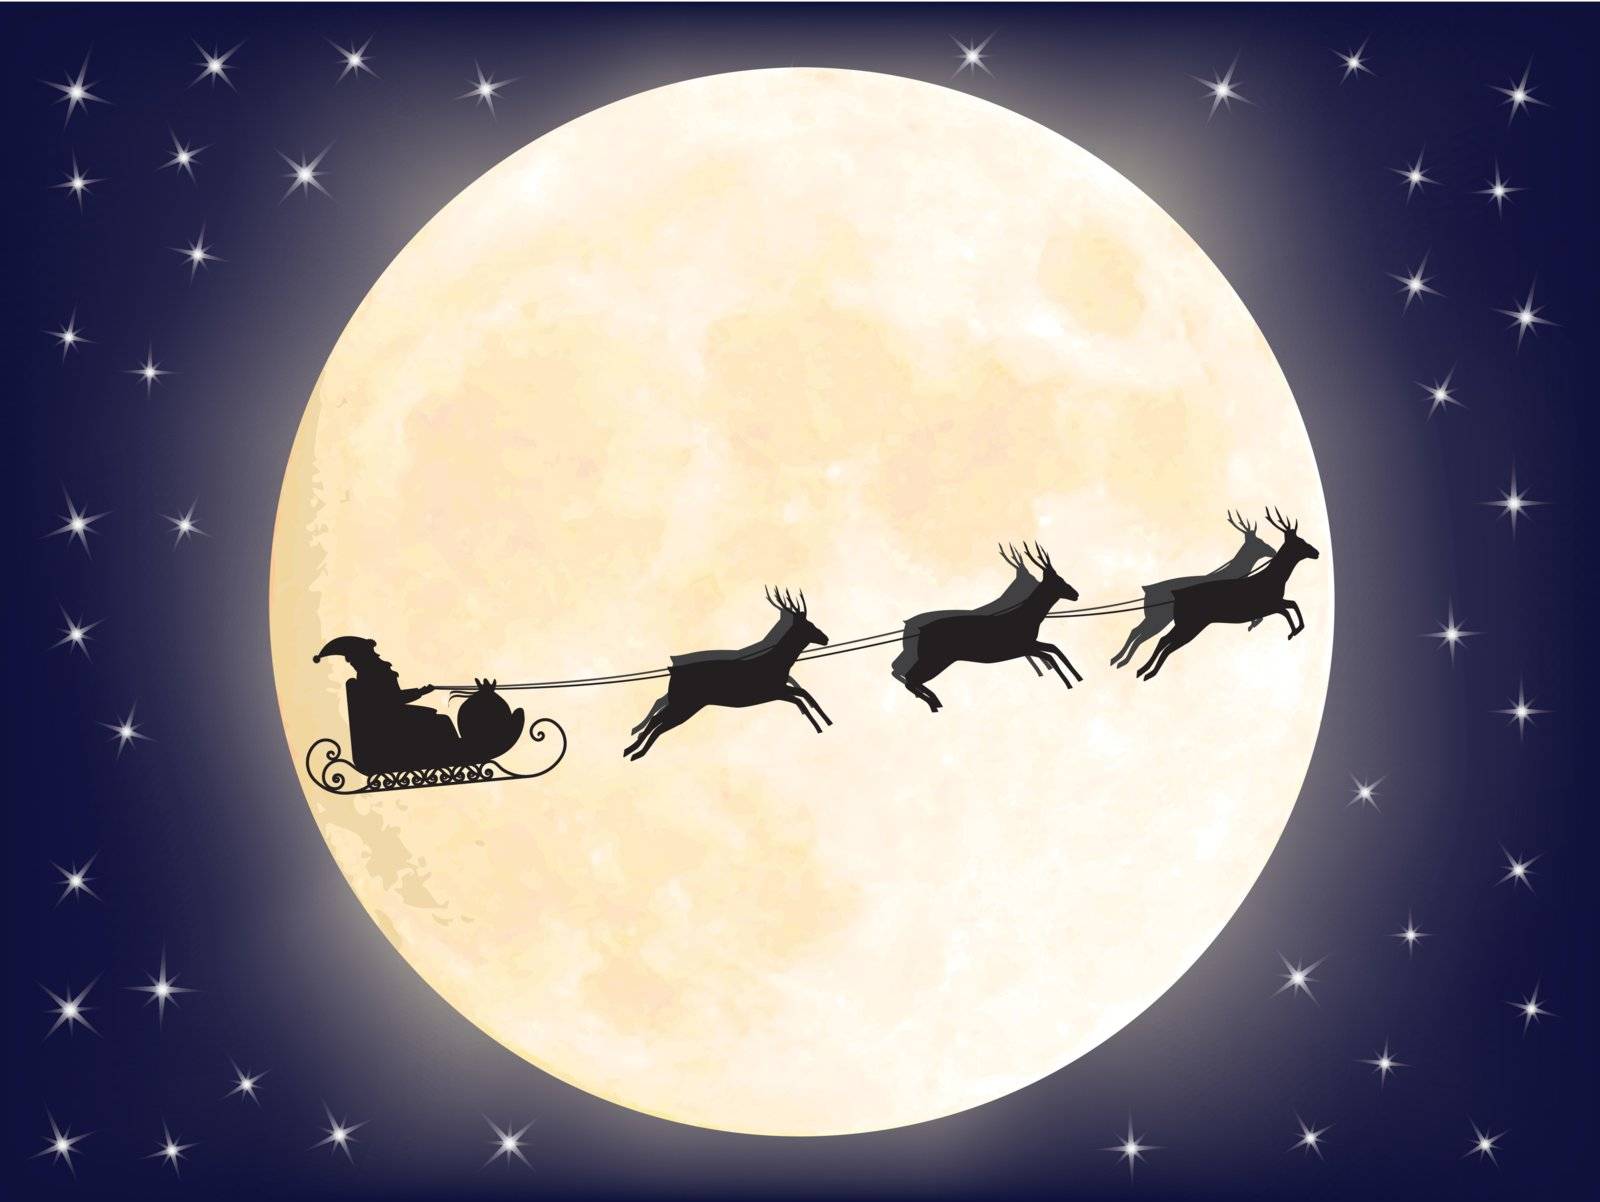 Santa's sleigh over full moon by romantiche